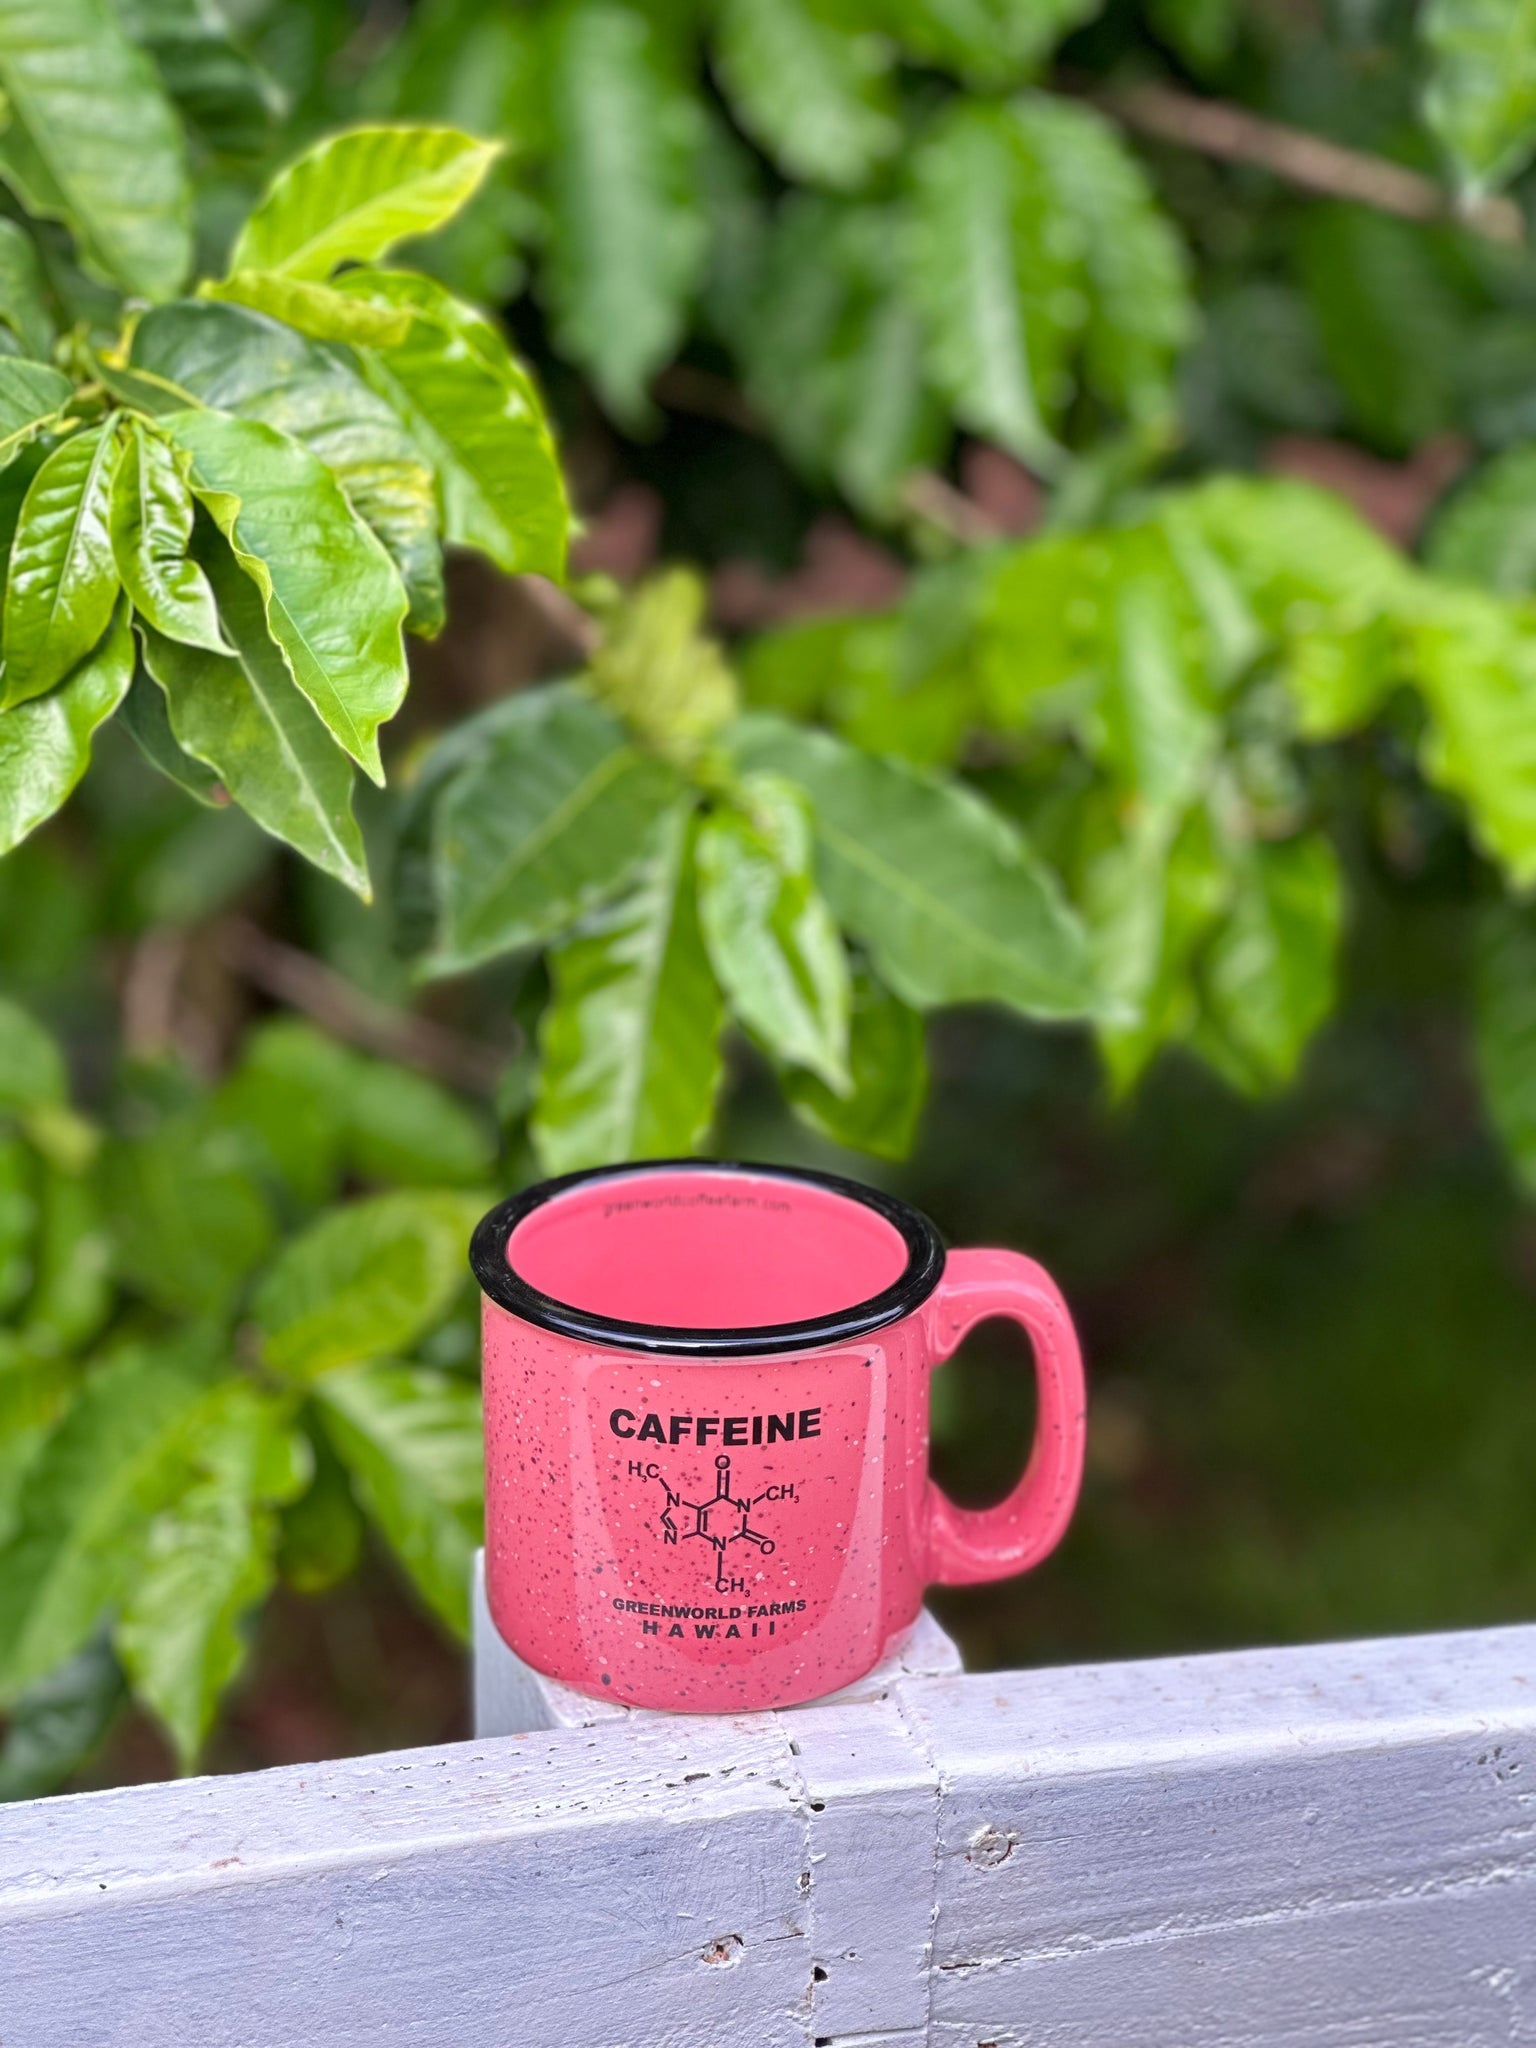 Ceramic Campfire Mug (2 Colors) — Stormcloud Brewing Company